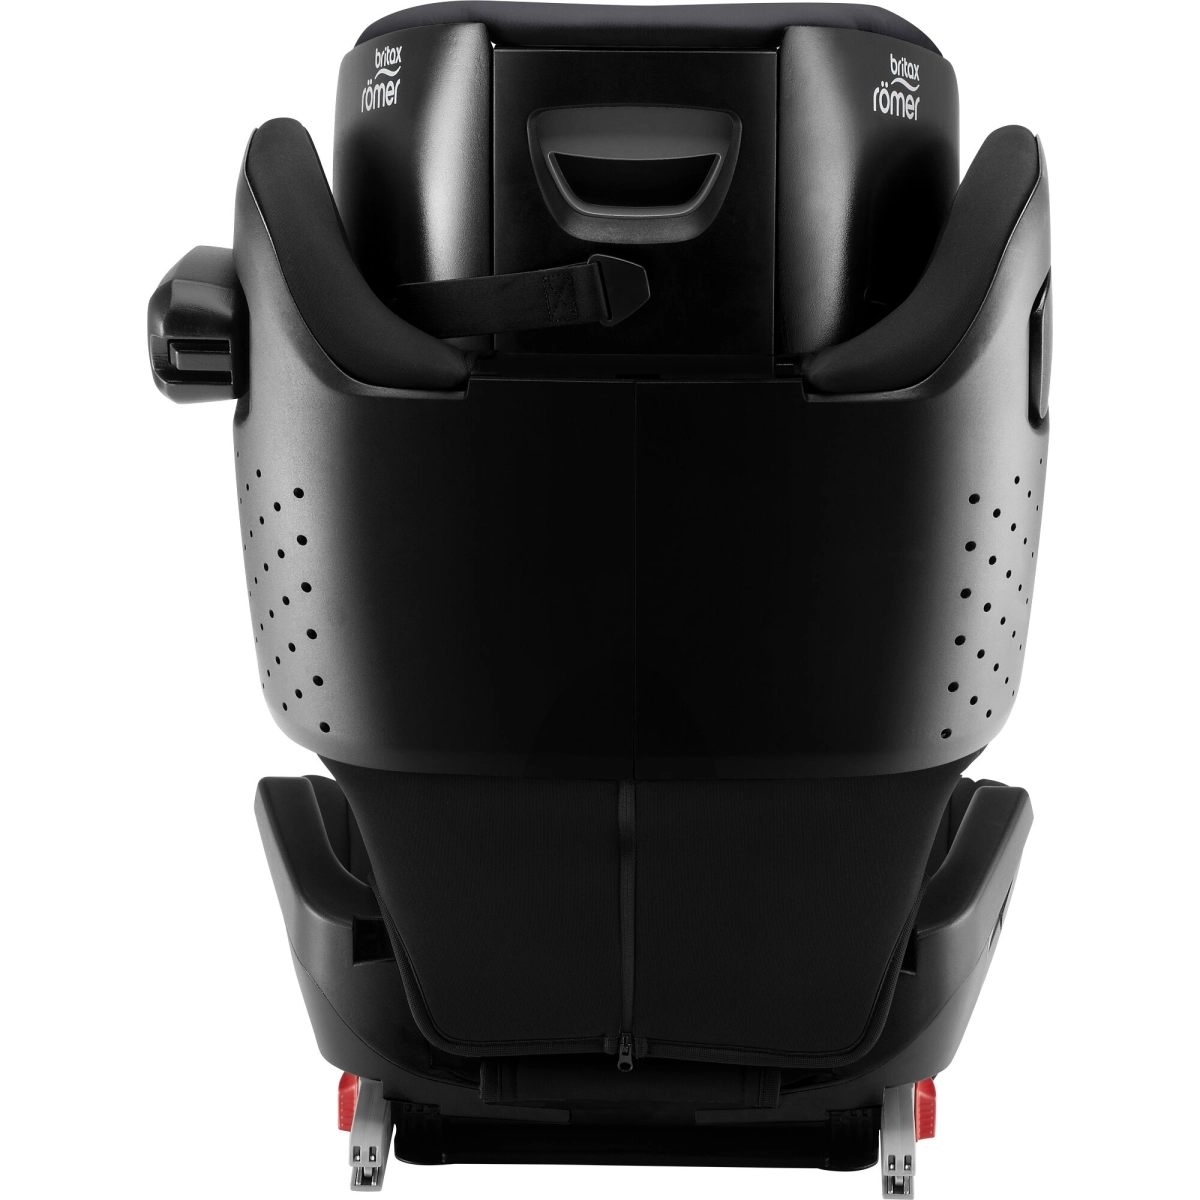 Britax Römer KIDFIX i-SIZE High Back Booster Car Seat - All about car seats